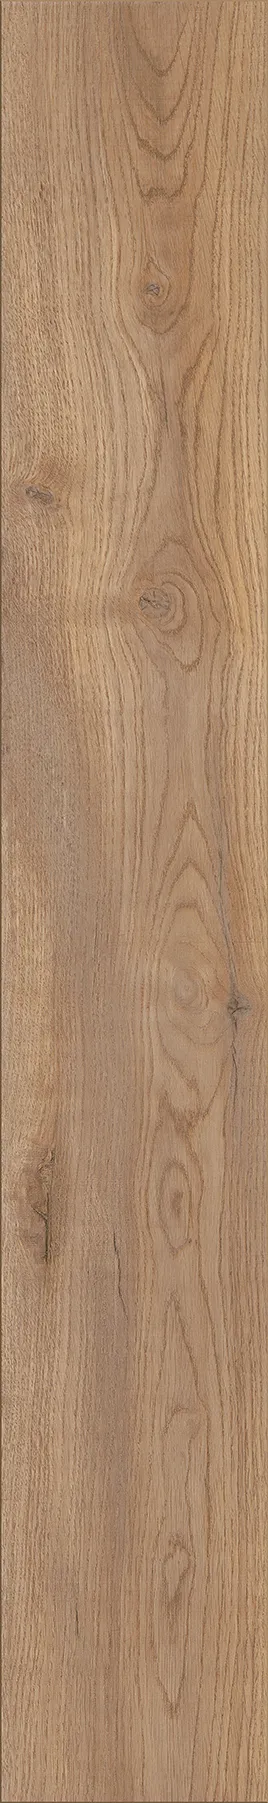 SPC Step - Butterscotch Oak 